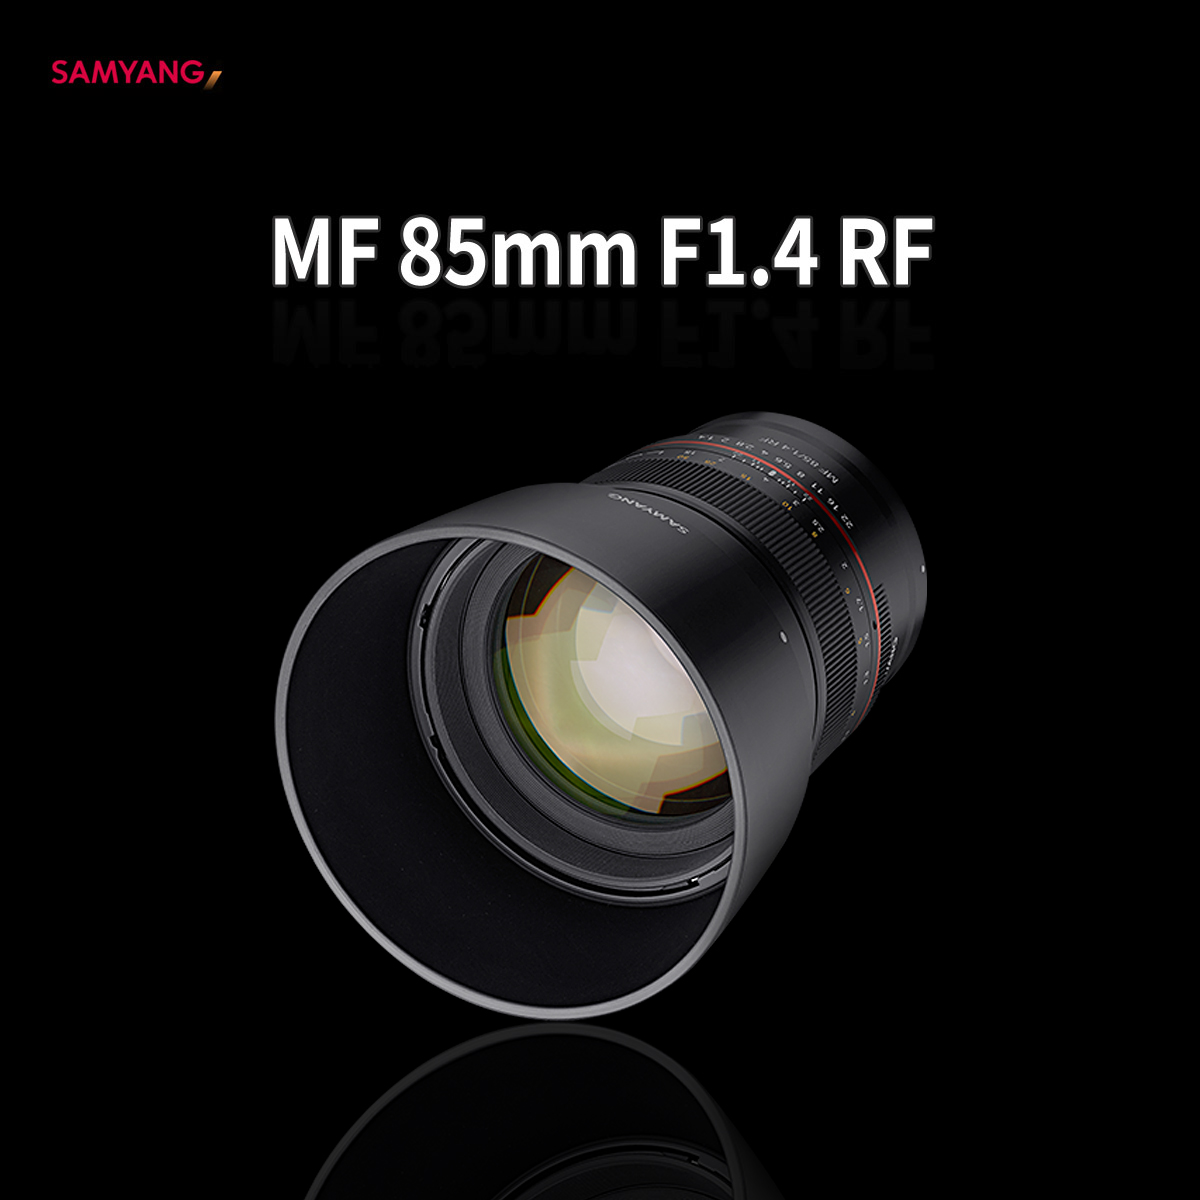 samyang_MF85mm_F1.4_RF